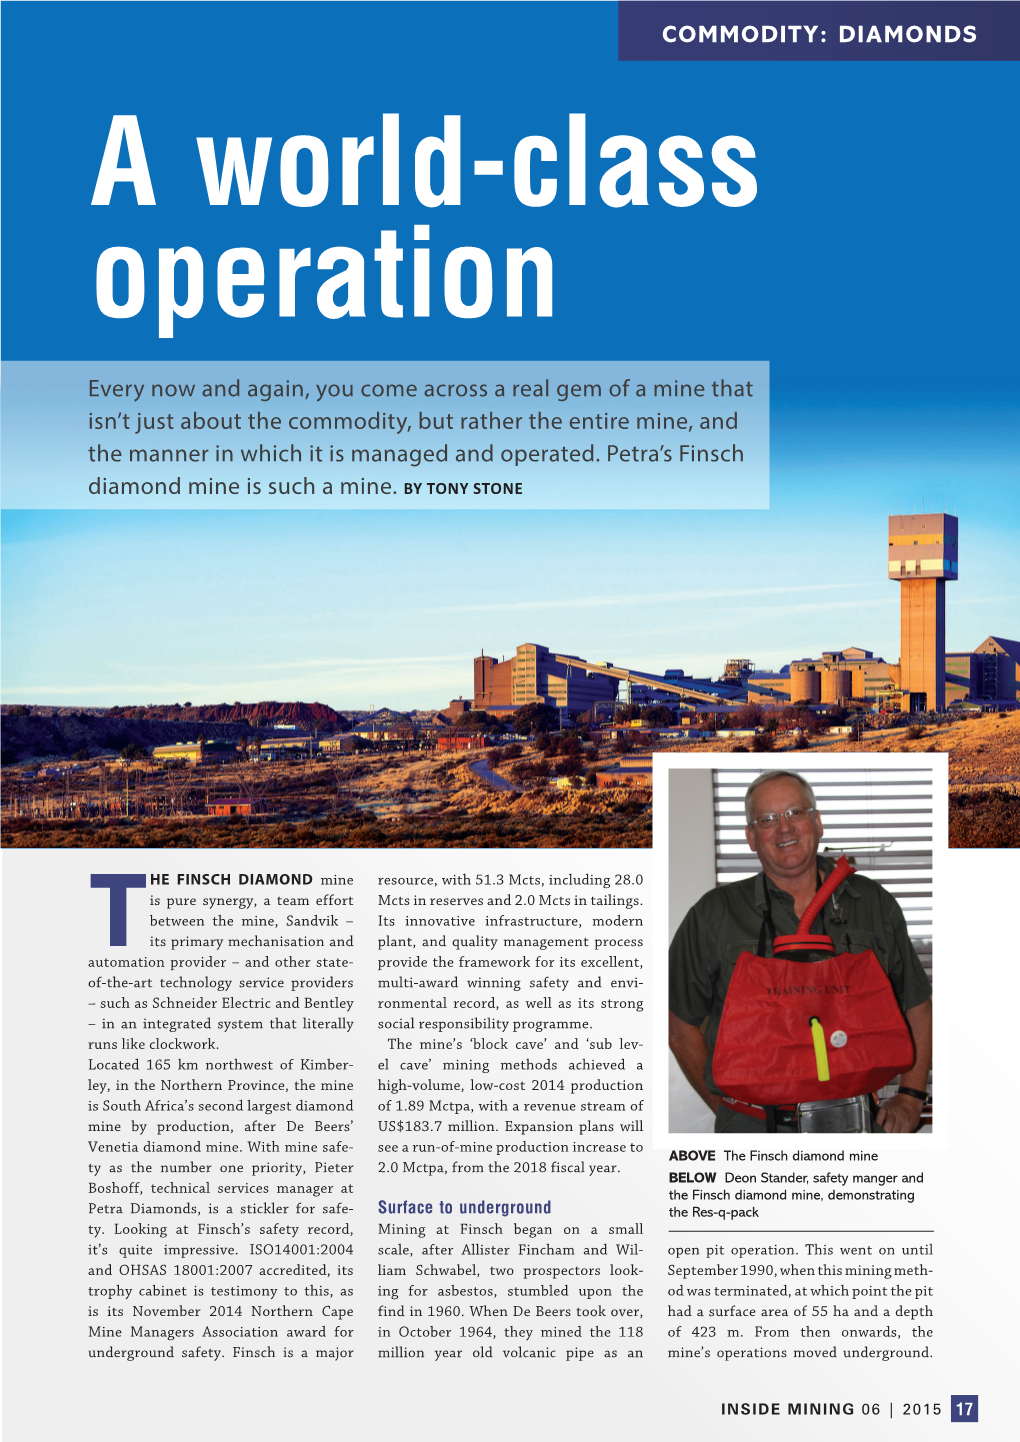 Read an Article on Finsch in Inside Mining, June 2015